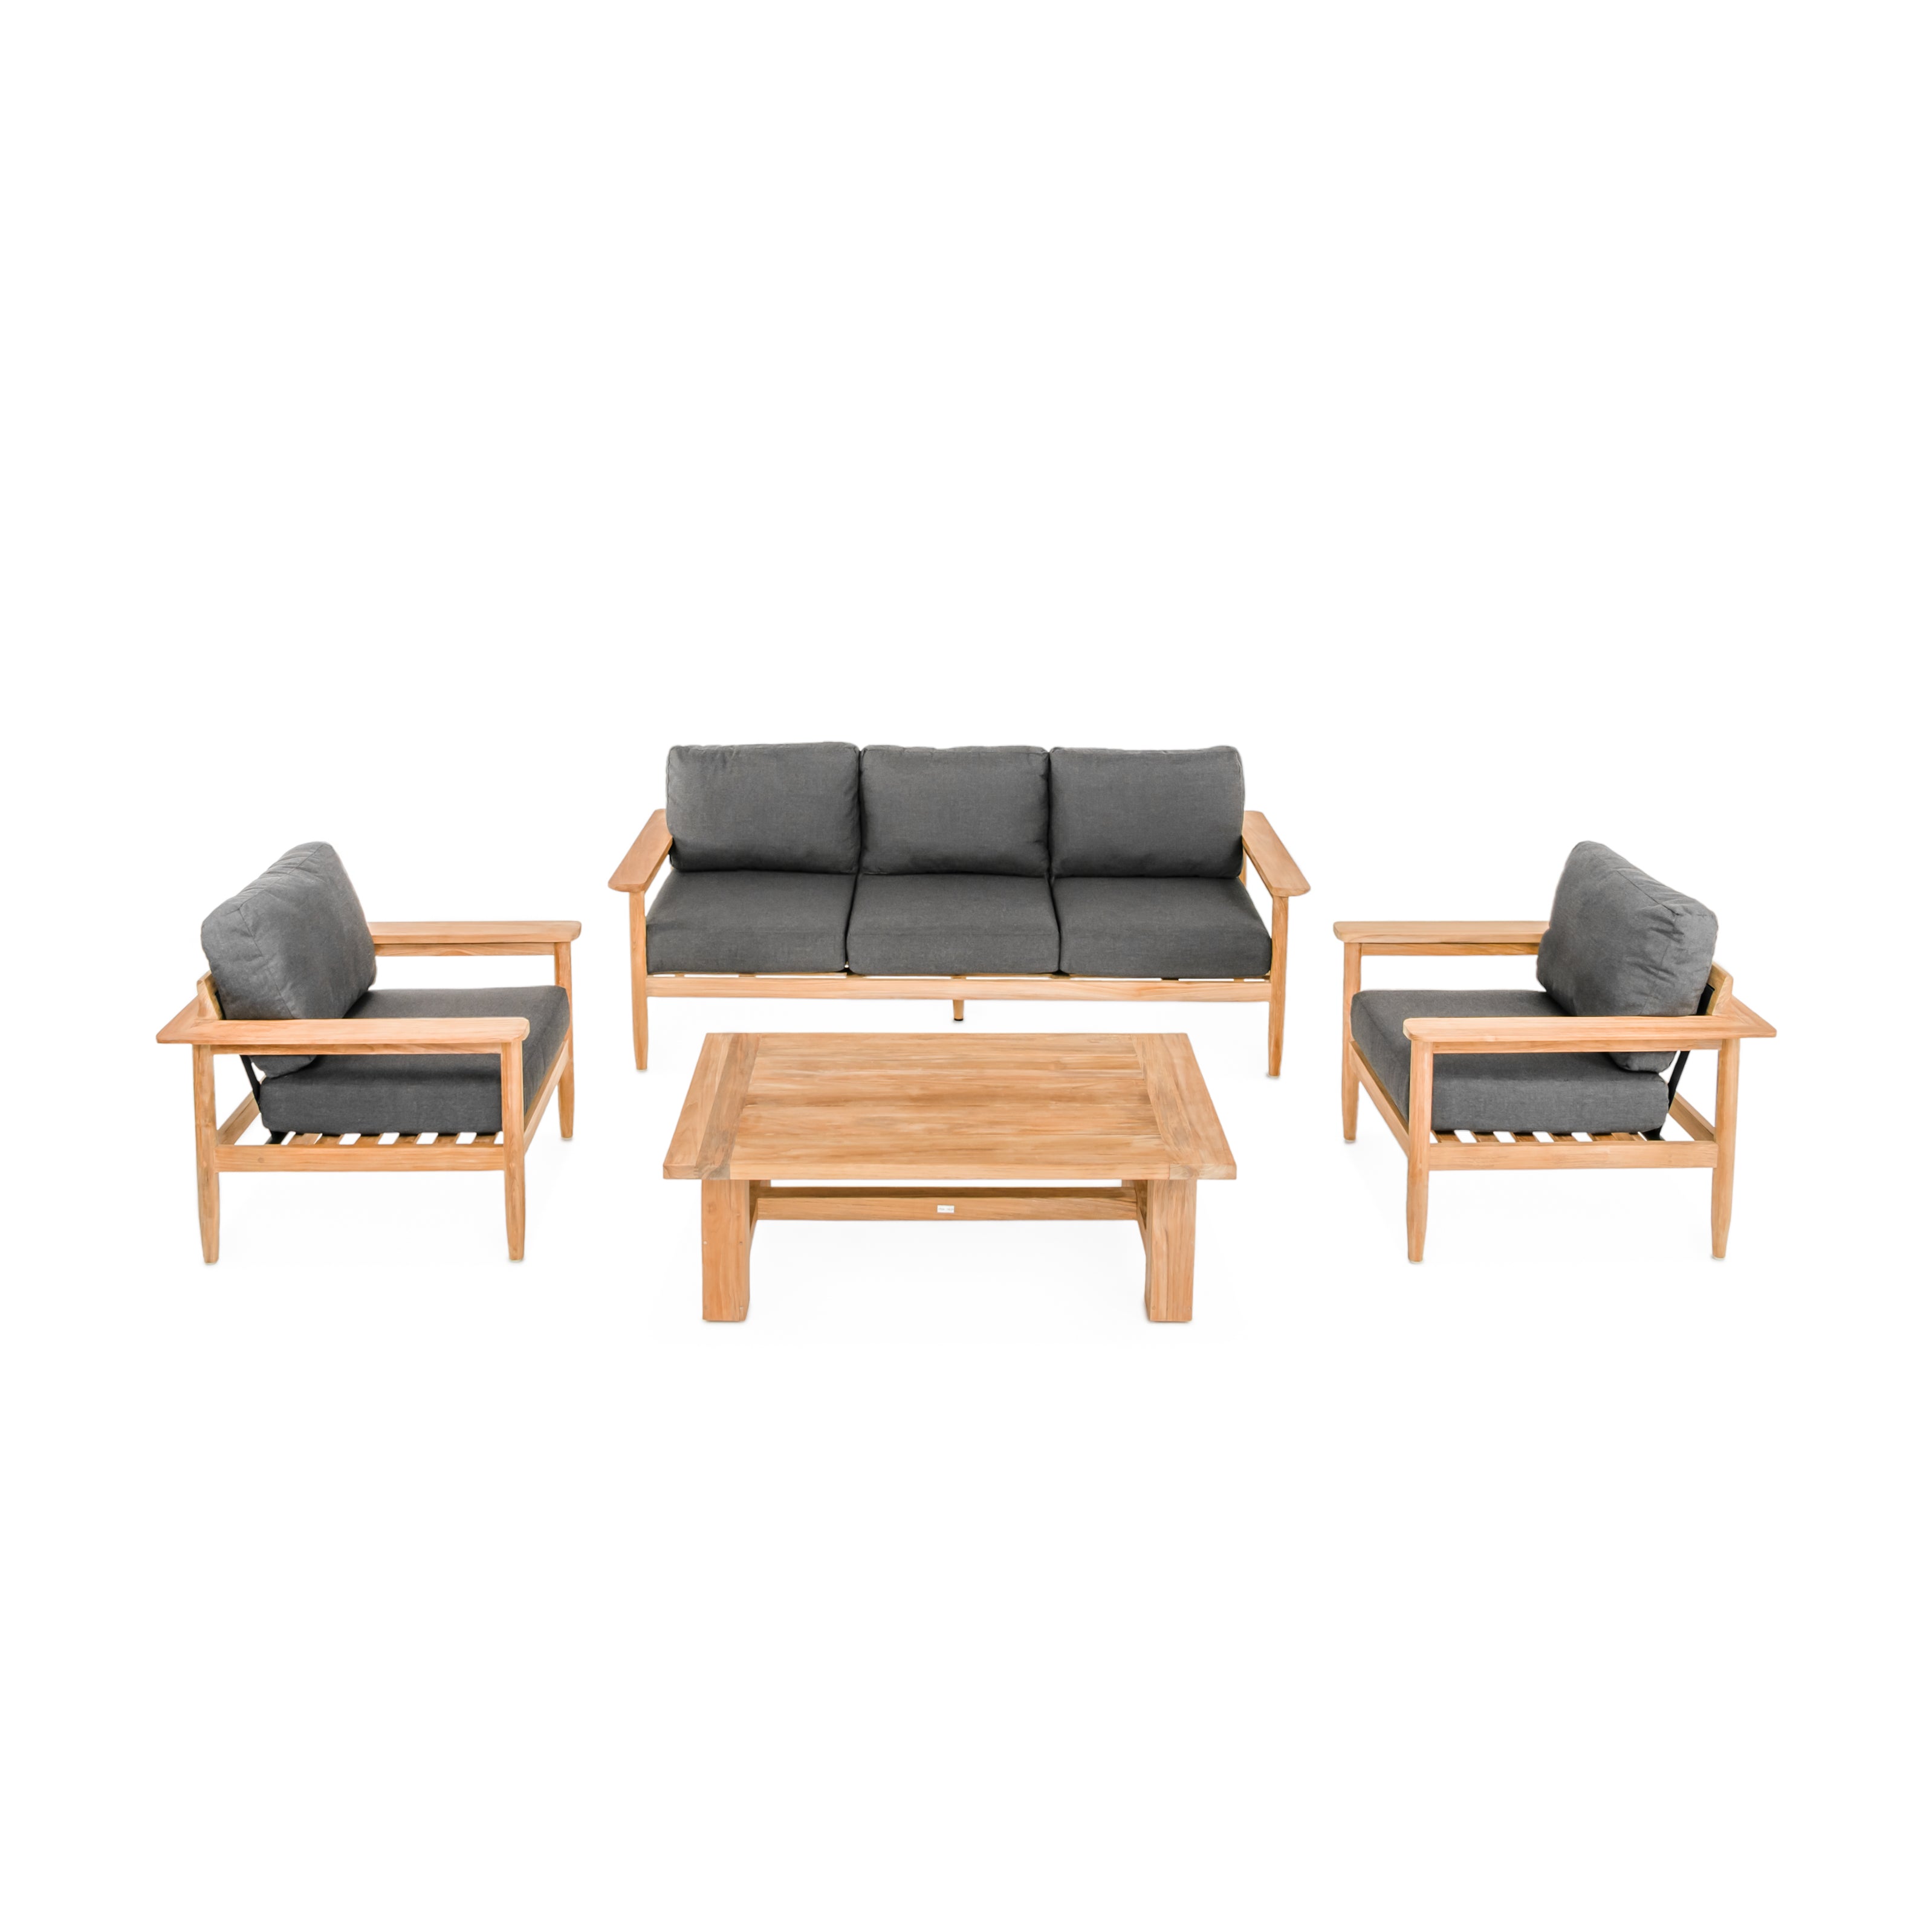 President Kano Mijlpaal 4 Piece Furniture Set - Outdoor Furniture Set - Ibiza Collection – Teak +  Table Outdoor